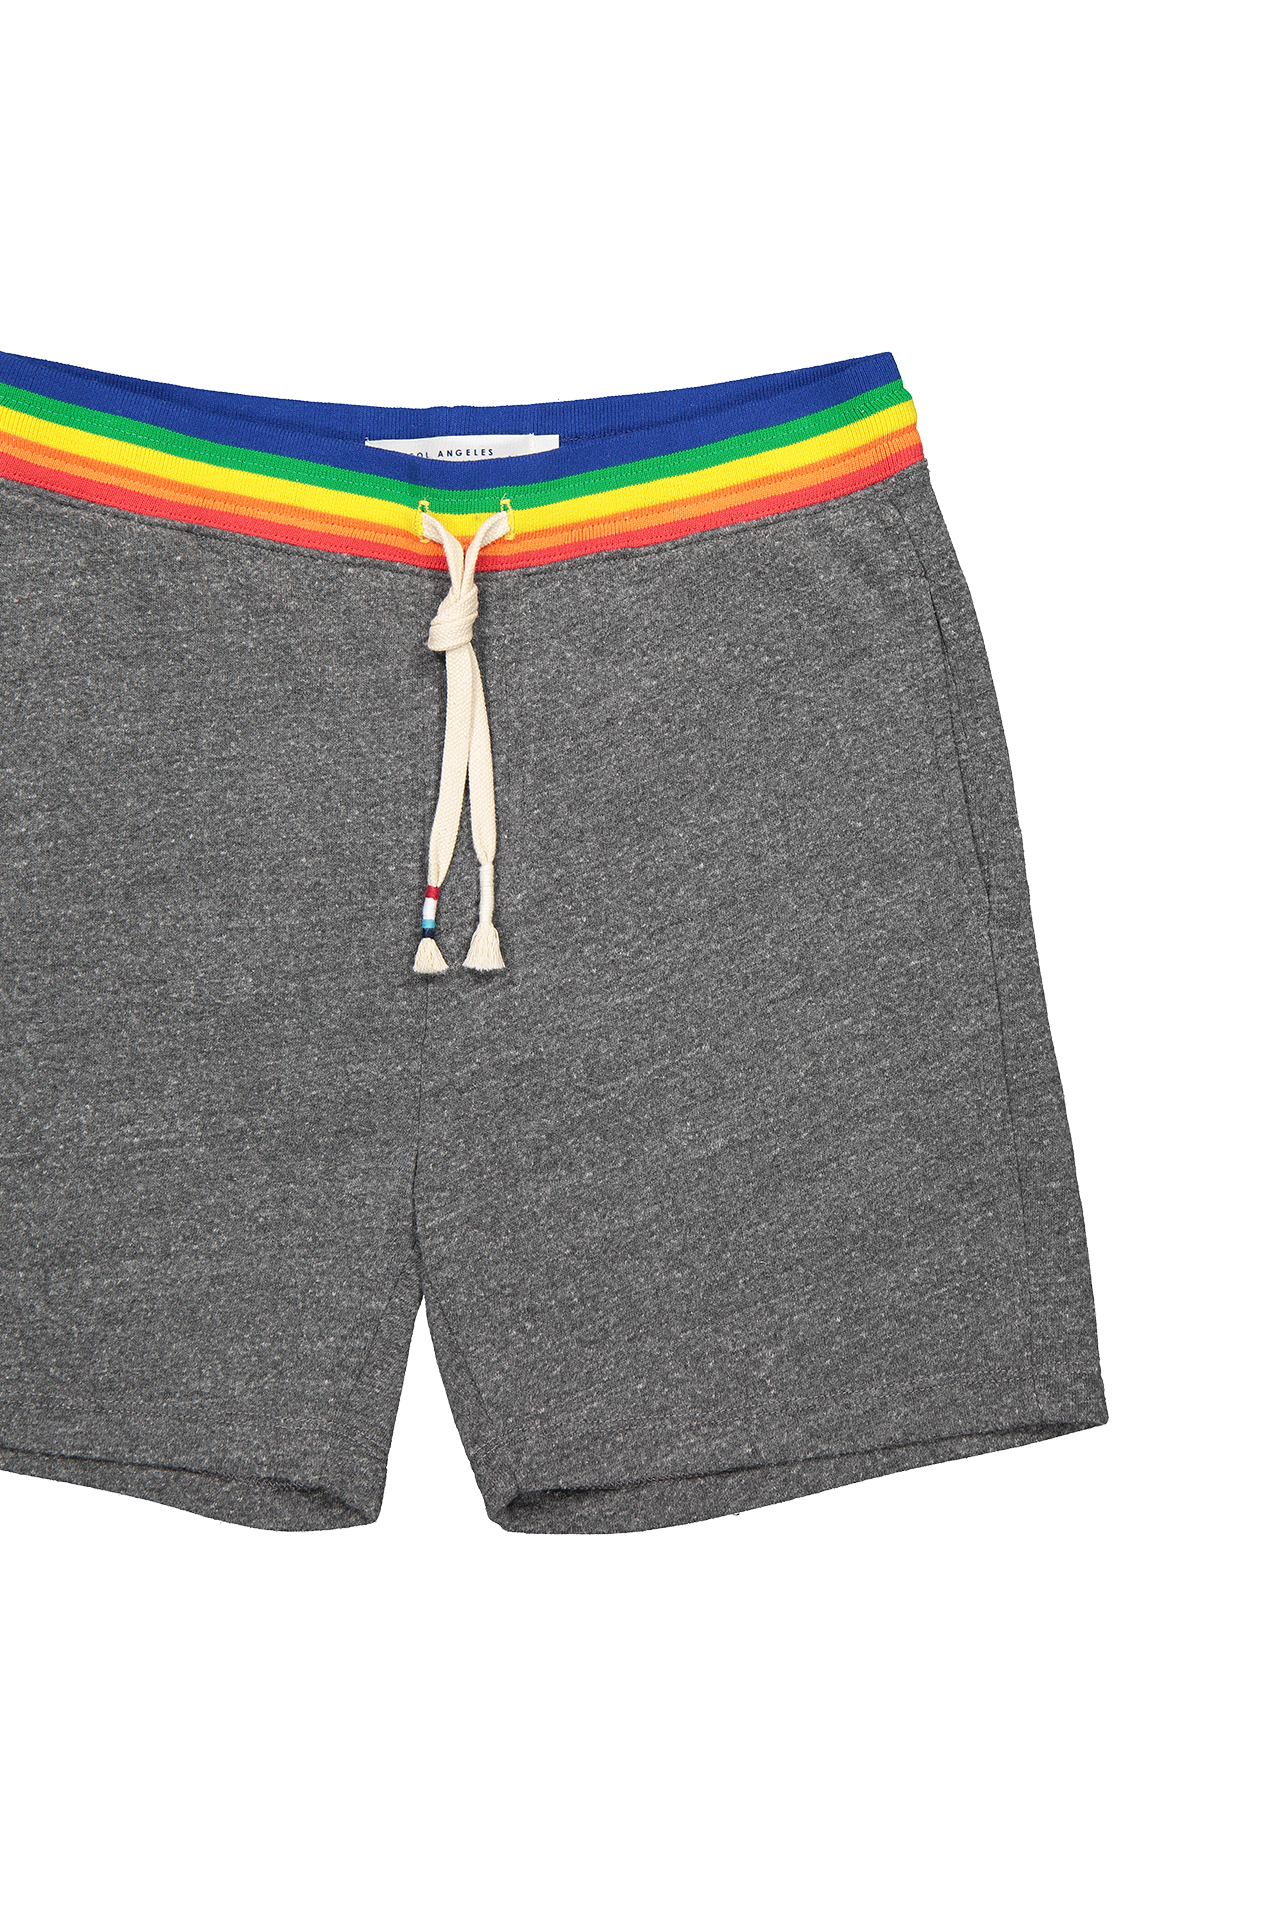 Rainbow Stripe Short (7120871719027)